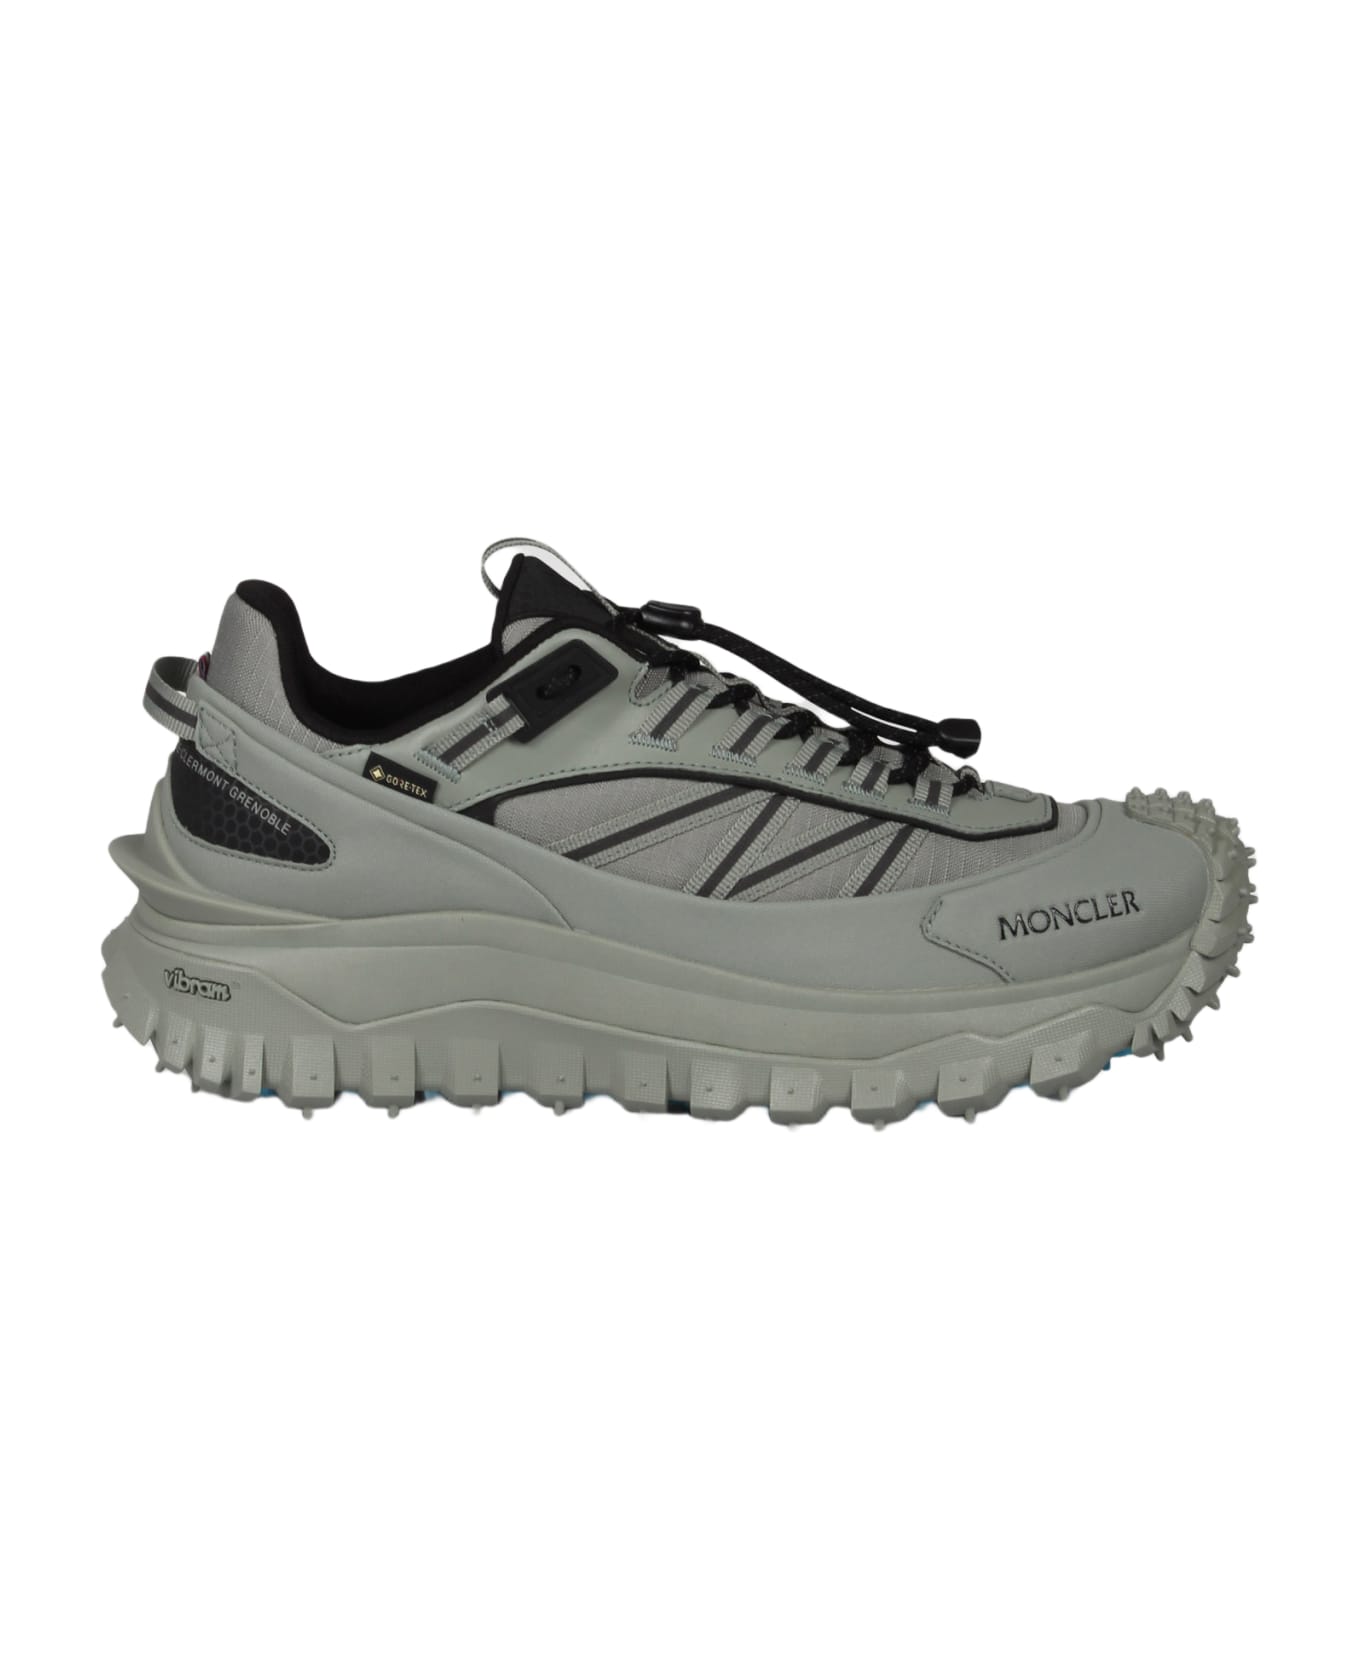 Moncler Trailgrip Gtx Sneakers - Green